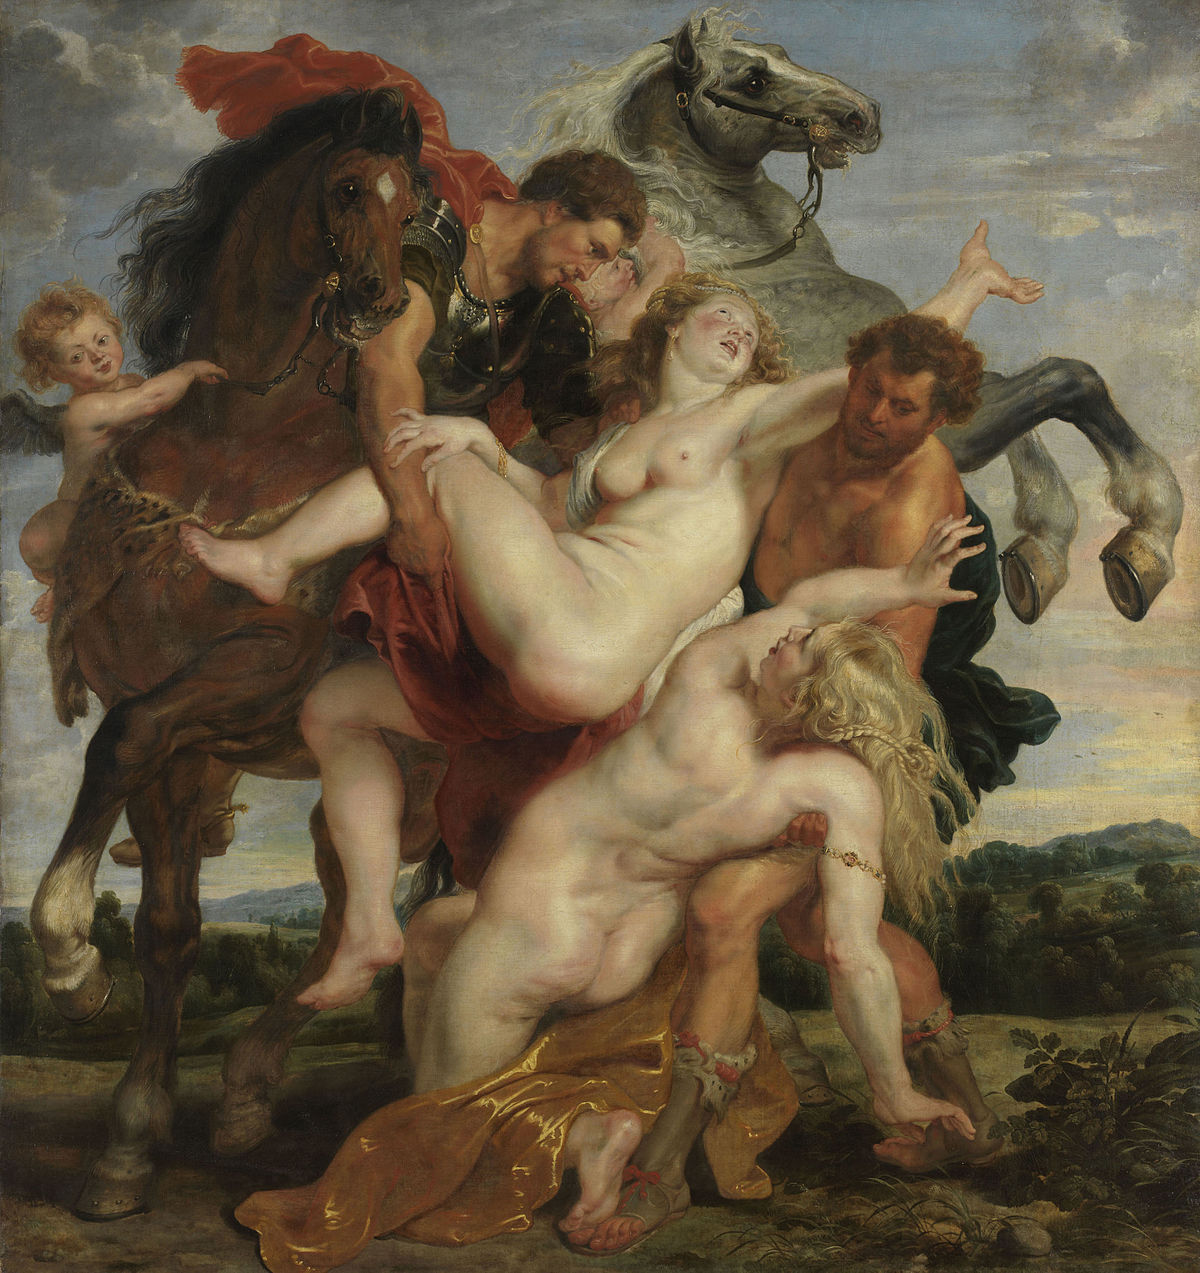 Peter_Paul_Rubens_-_The_Rape_of_the_Daughters_of_Leucippus.jpg